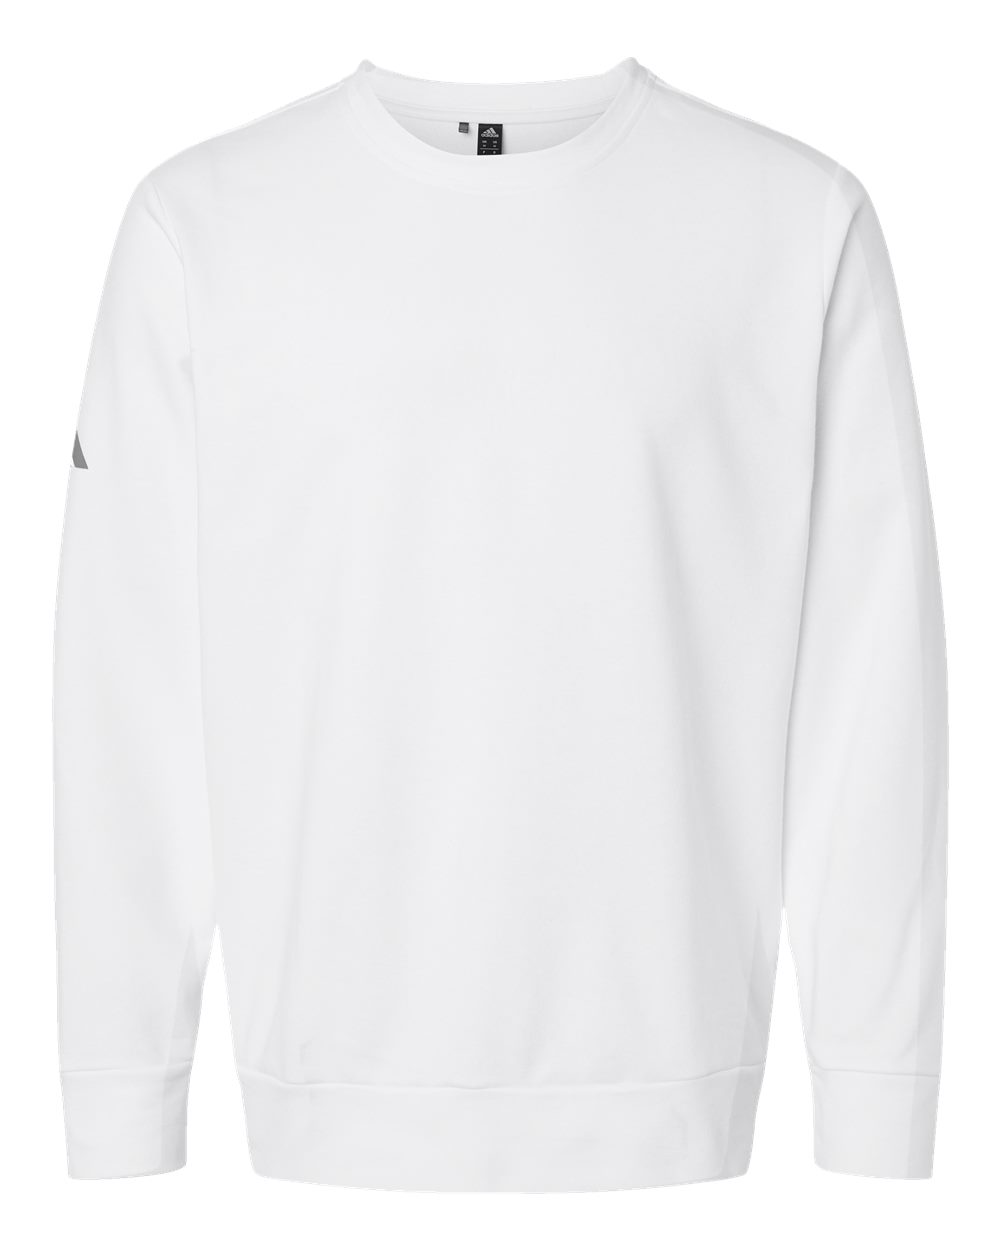 Adult - Adidas Fleece Crewneck Sweatshirt - (Nebraska Gold)